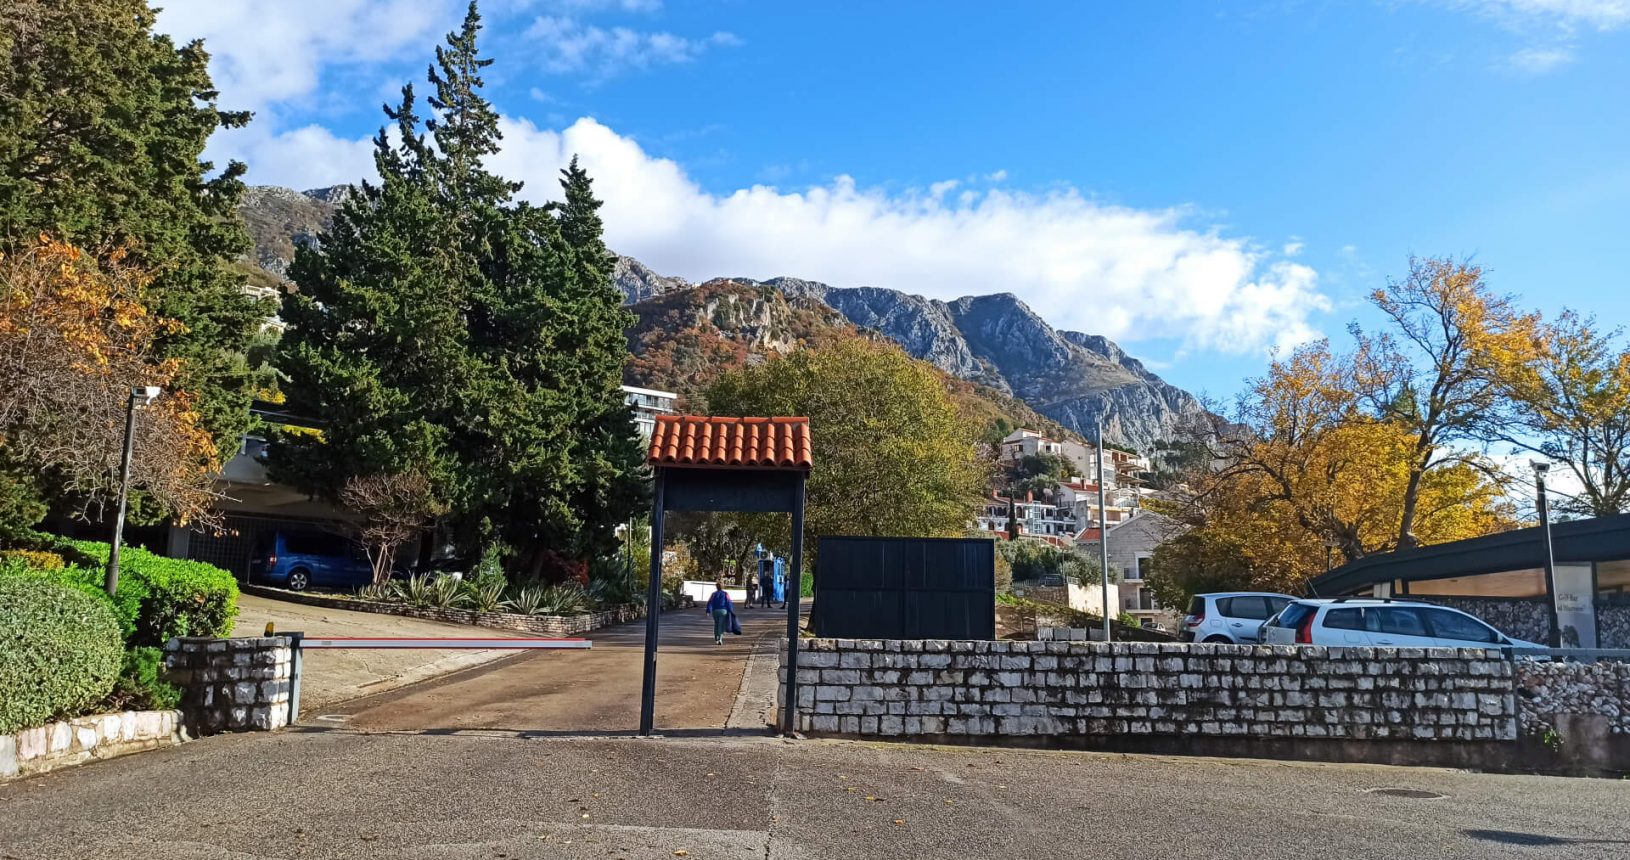 Entrance to the Park Sveti Stefan